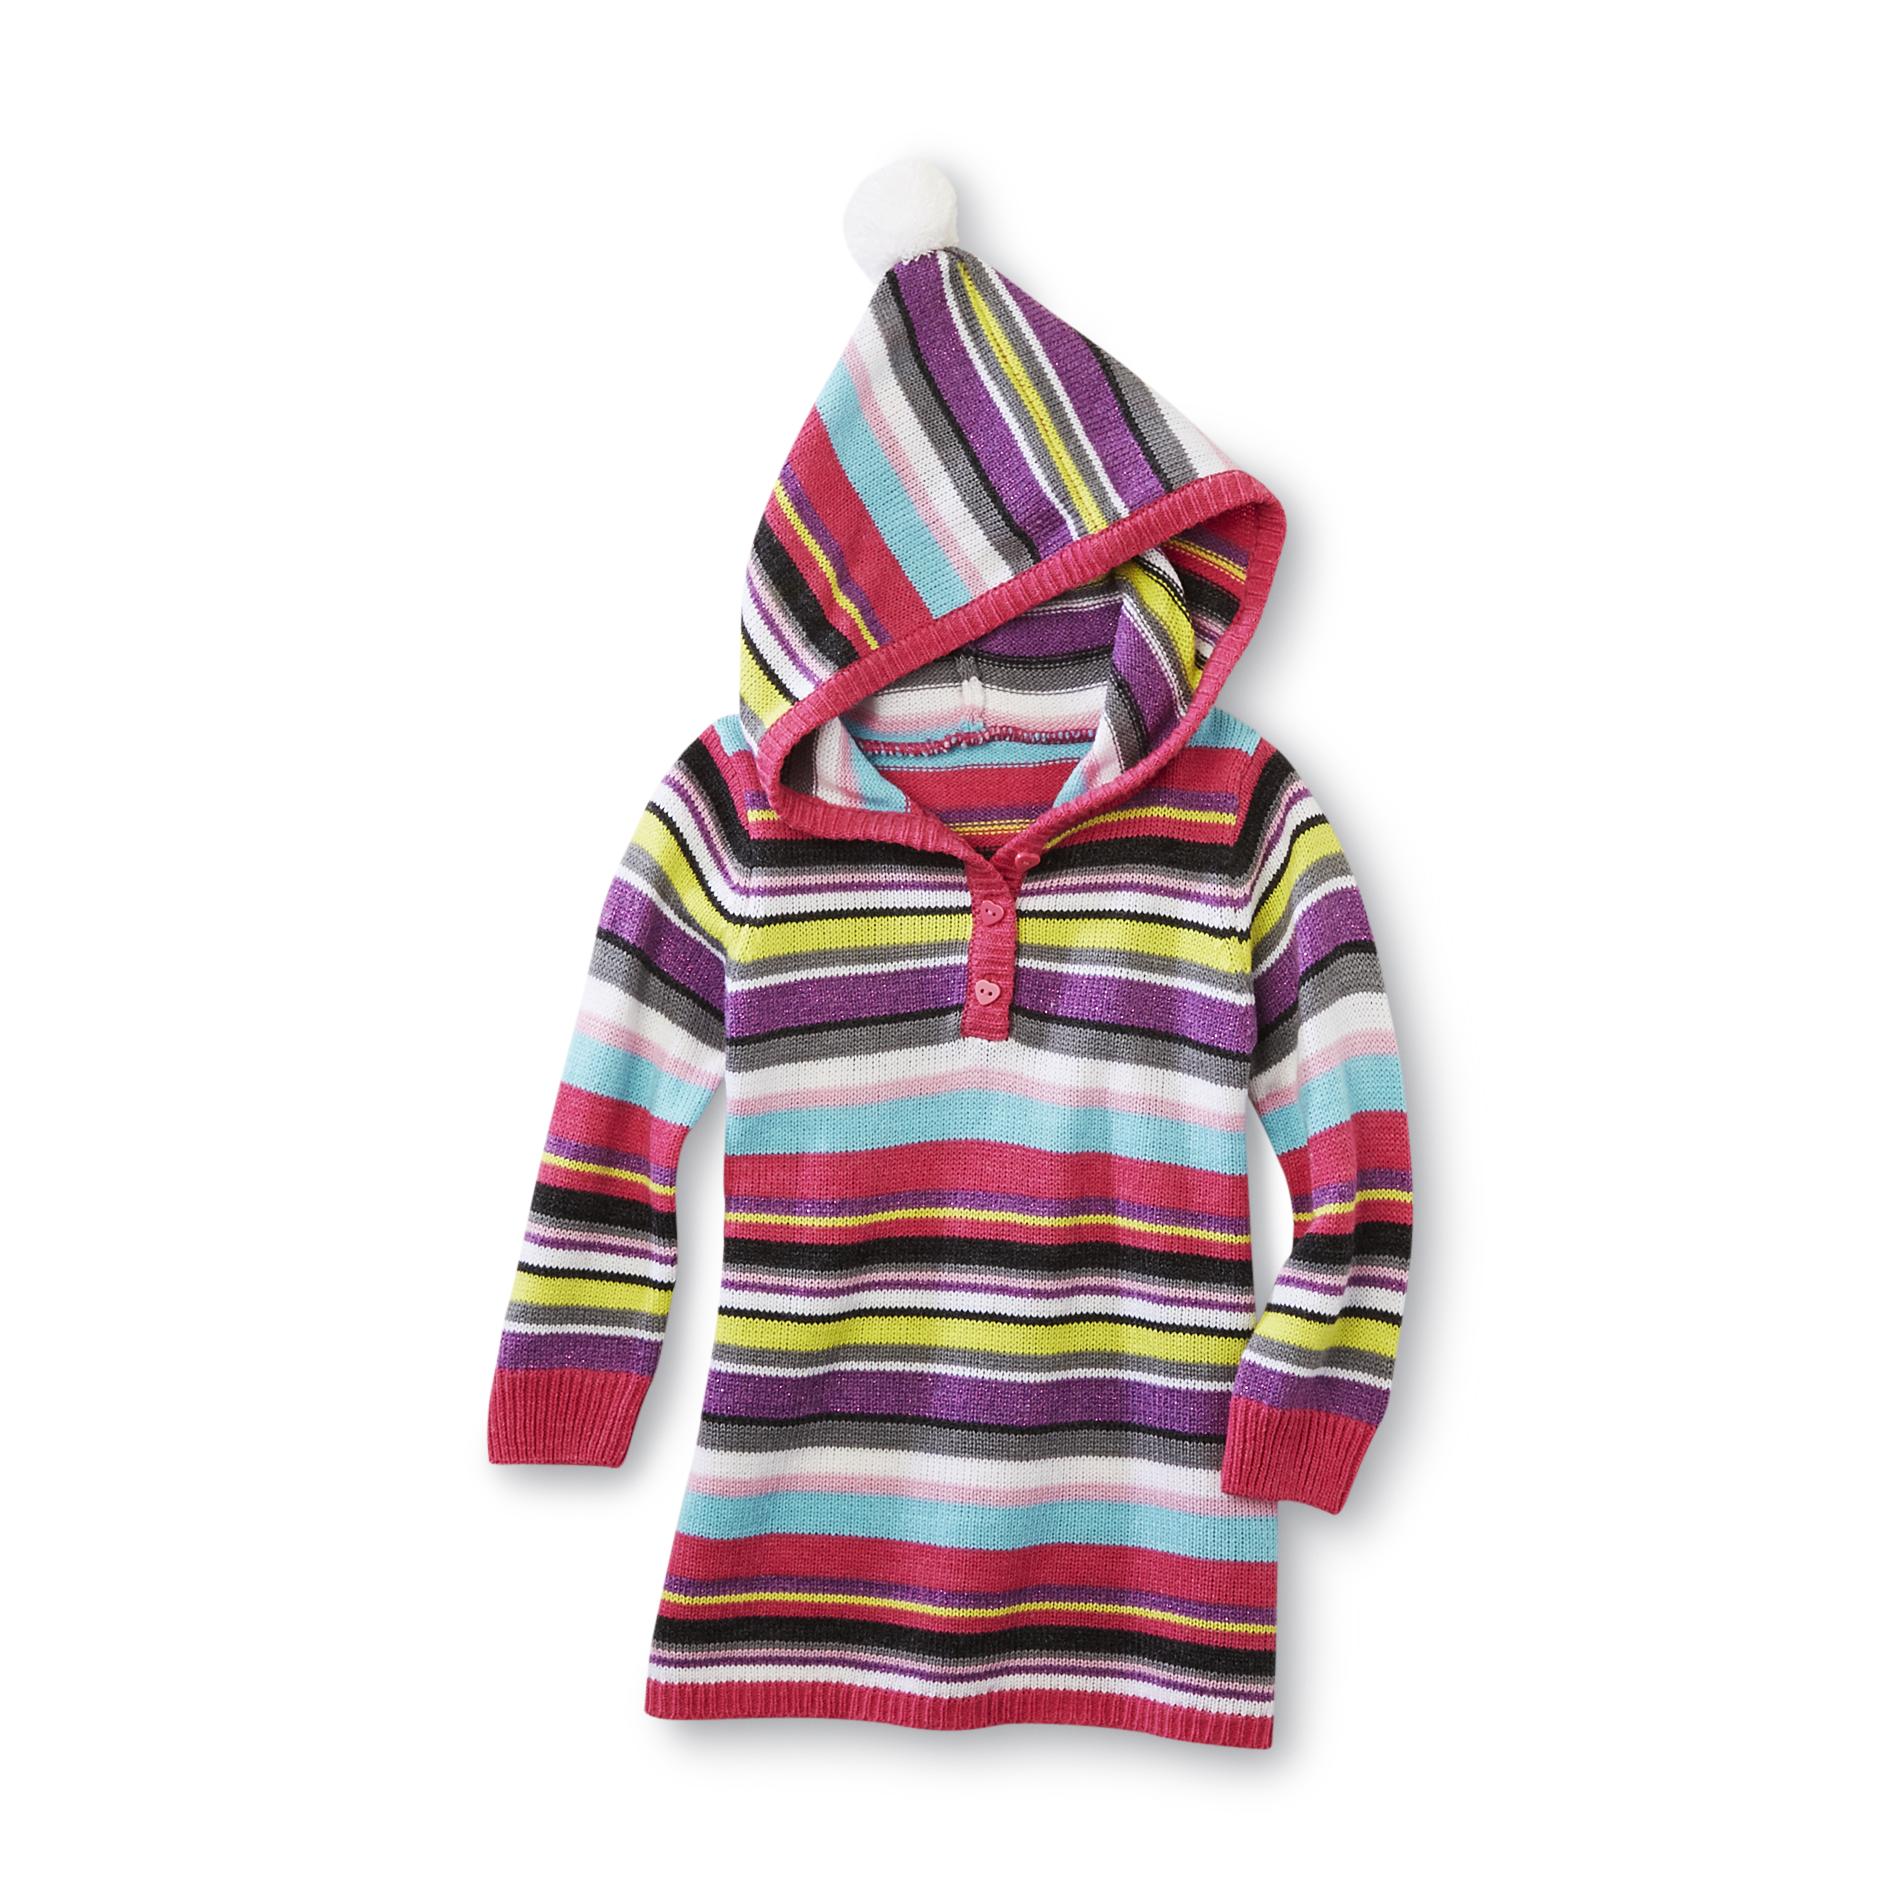 WonderKids Infant & Toddler Girl's Hooded Tunic Sweater - Striped